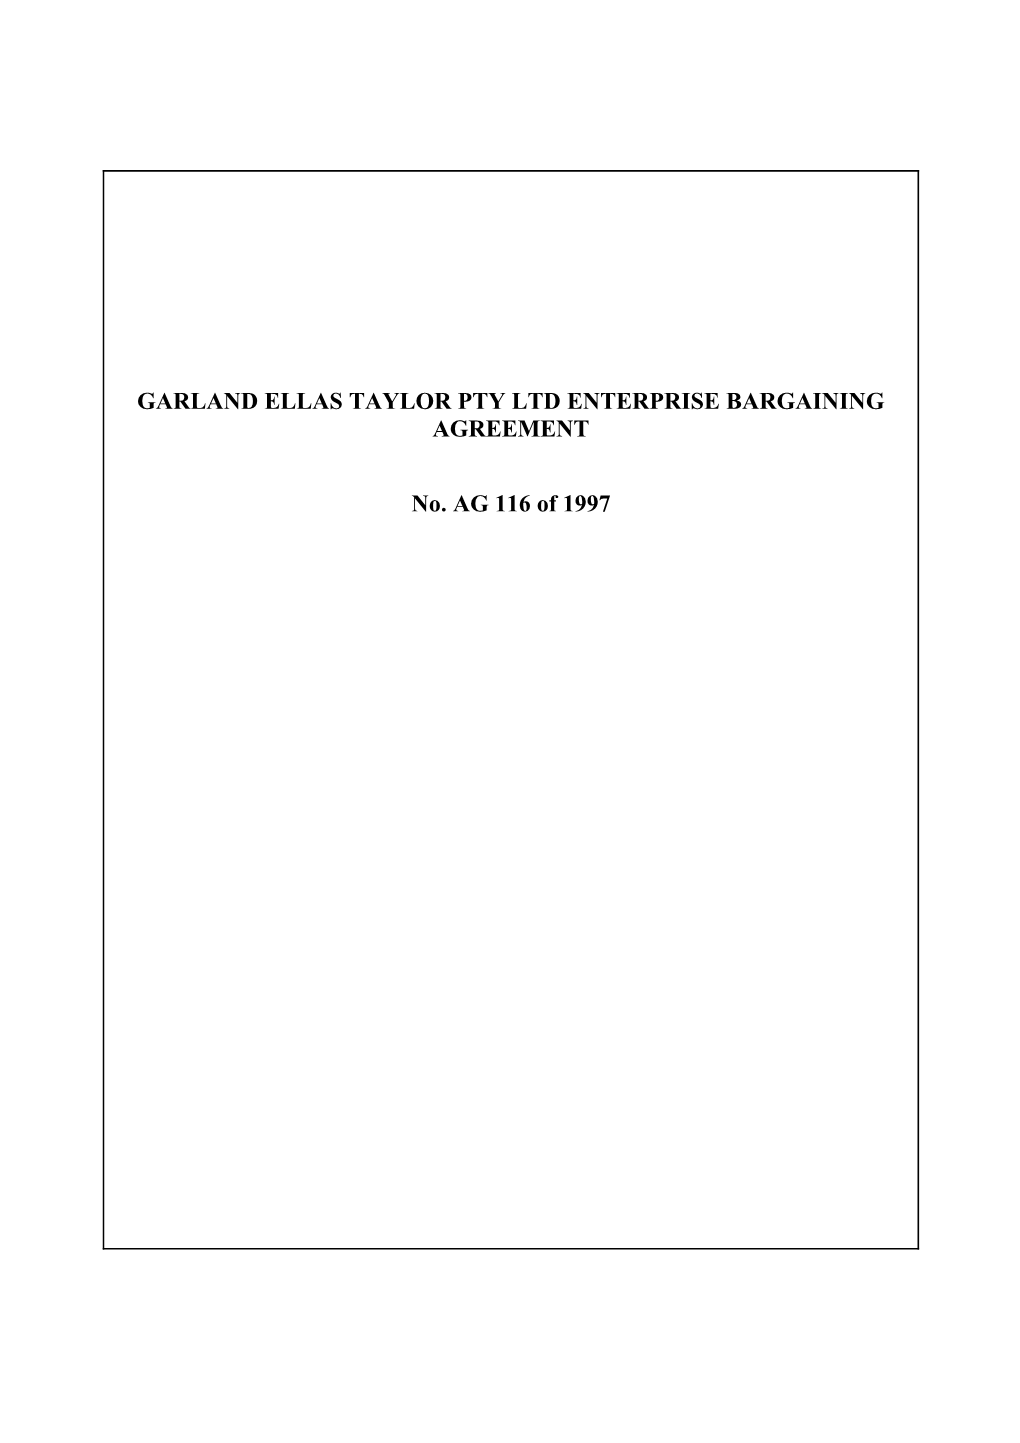 Garland Ellas Taylor Pty Ltd Enterprise Bargaining Agreement